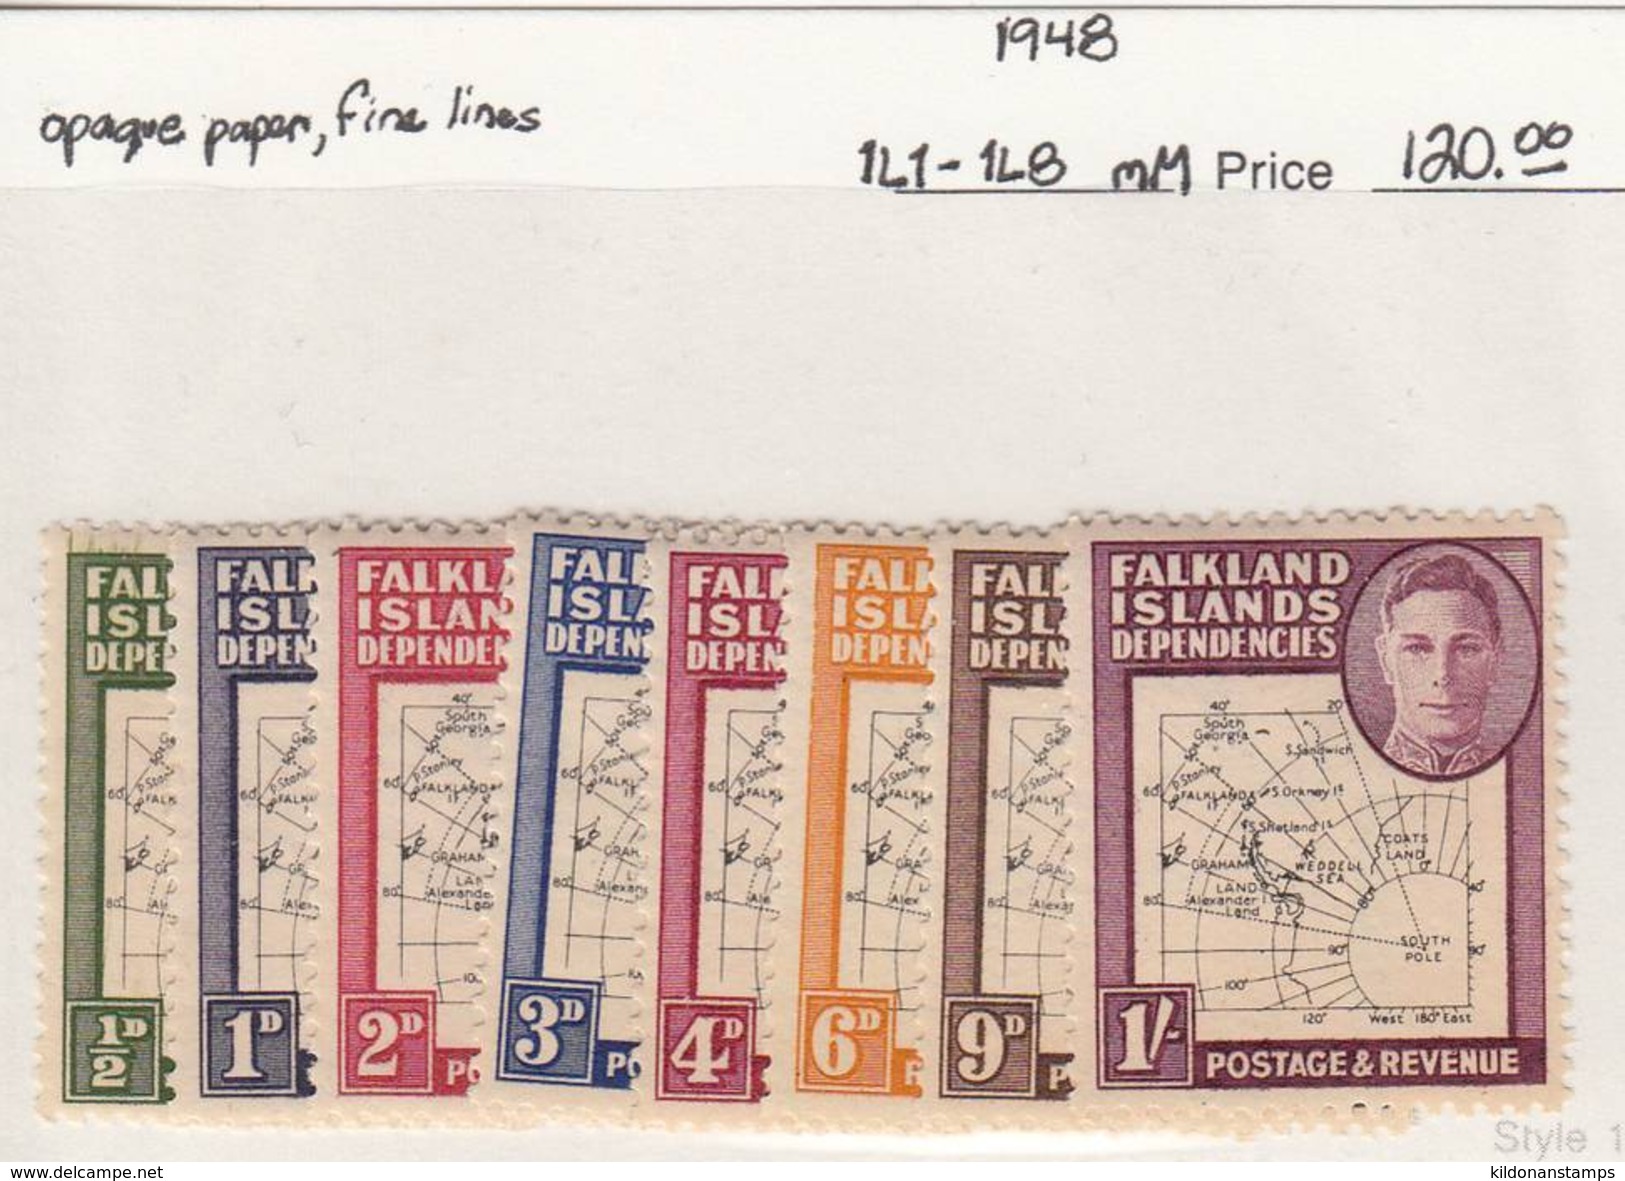 Falkland Islands Dep. 1948 Opaque Paper, Fine Lines, Full Set, Mint Mounted, Sc# 1L1-1L8, SG G9-G16 - Falkland